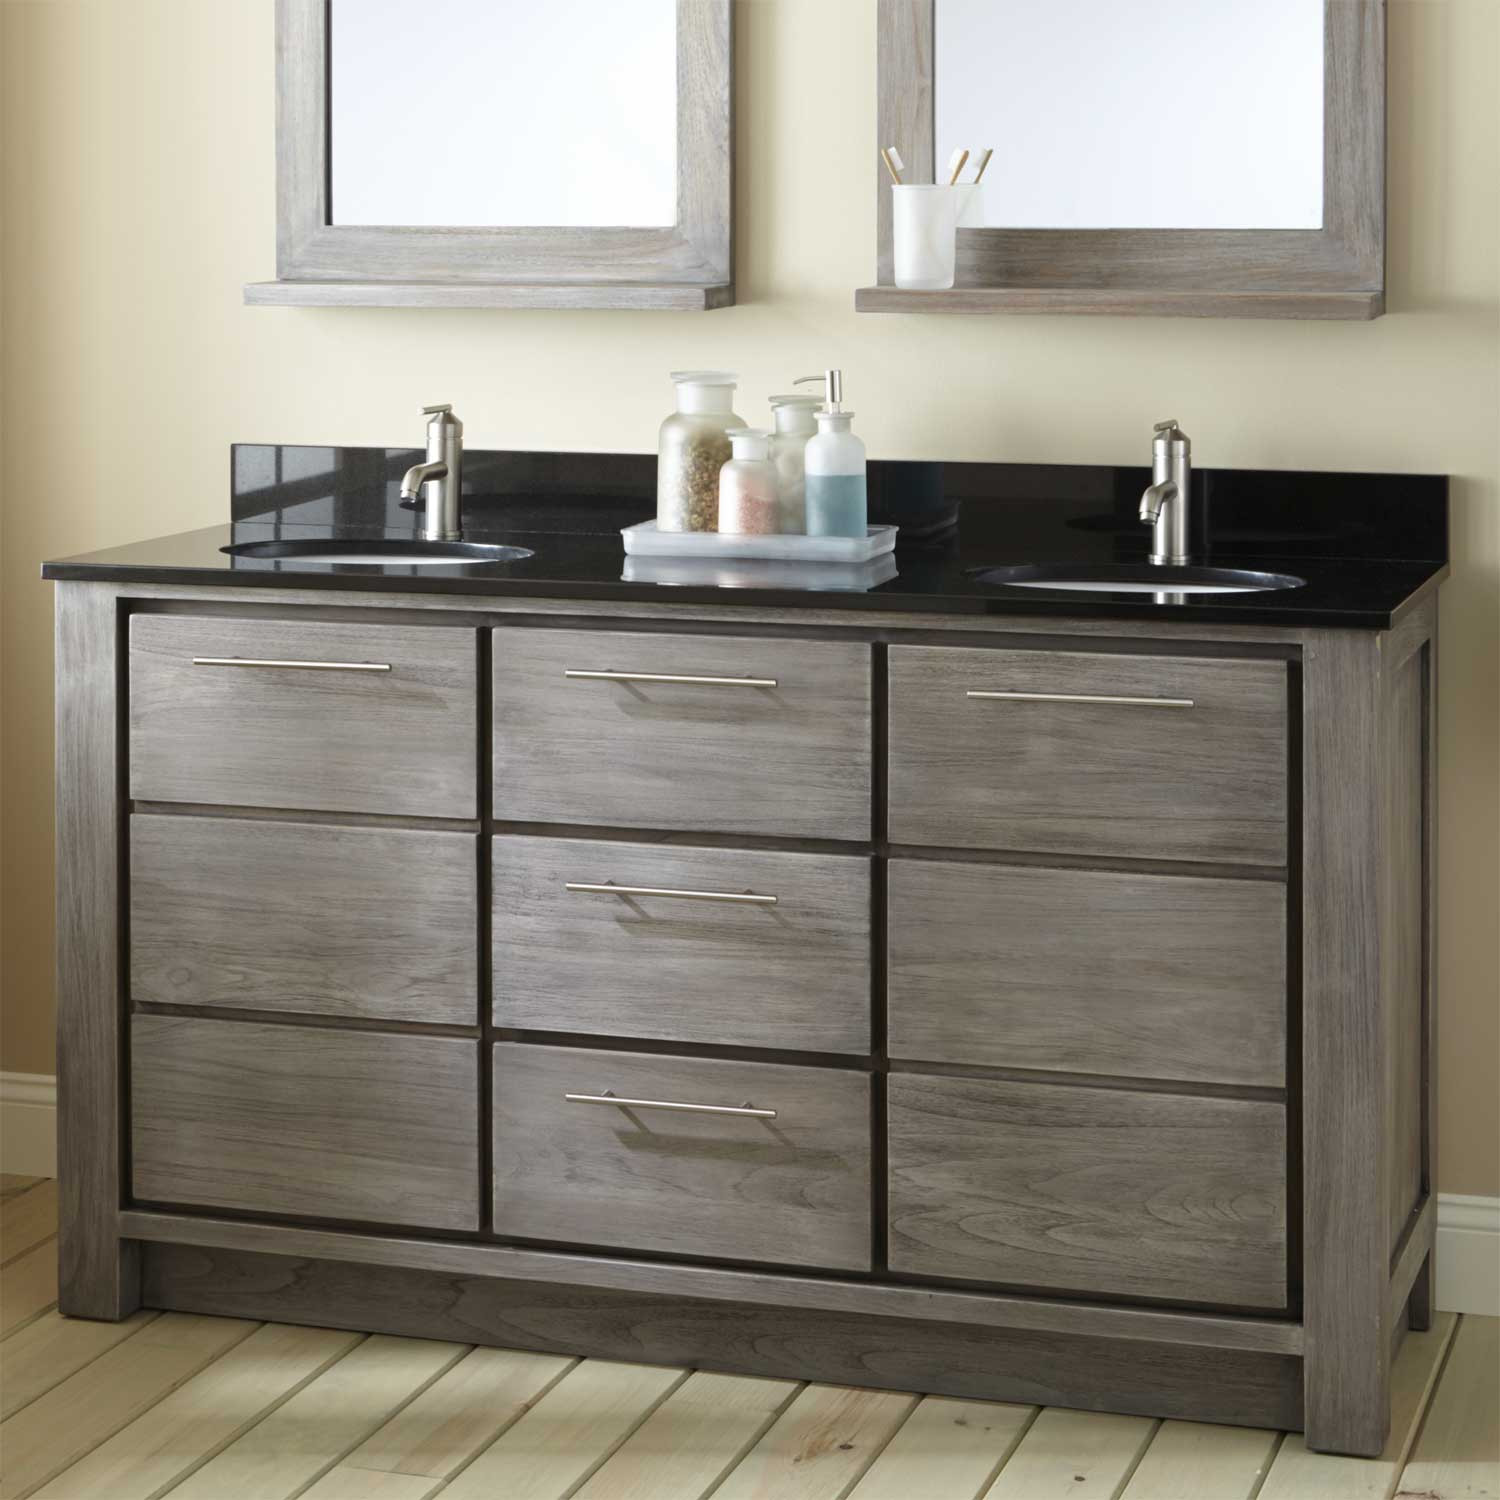 Two Sink Bathroom Vanity
 72" Venica Teak Double Vessel Sinks Vanity Gray Wash